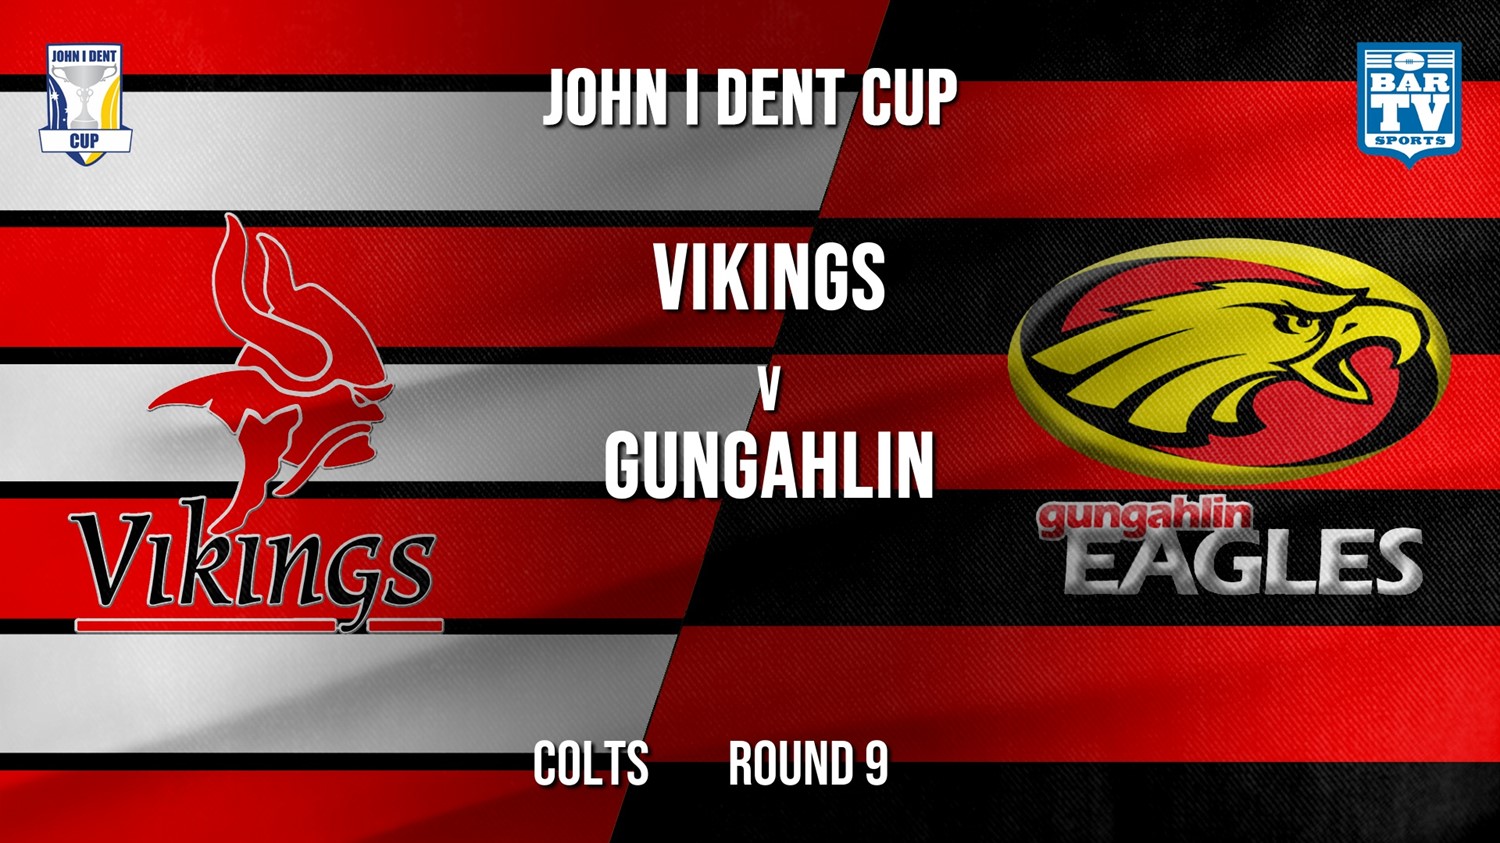 John I Dent Round 9 - Colts - Tuggeranong Vikings v Gungahlin Eagles Minigame Slate Image